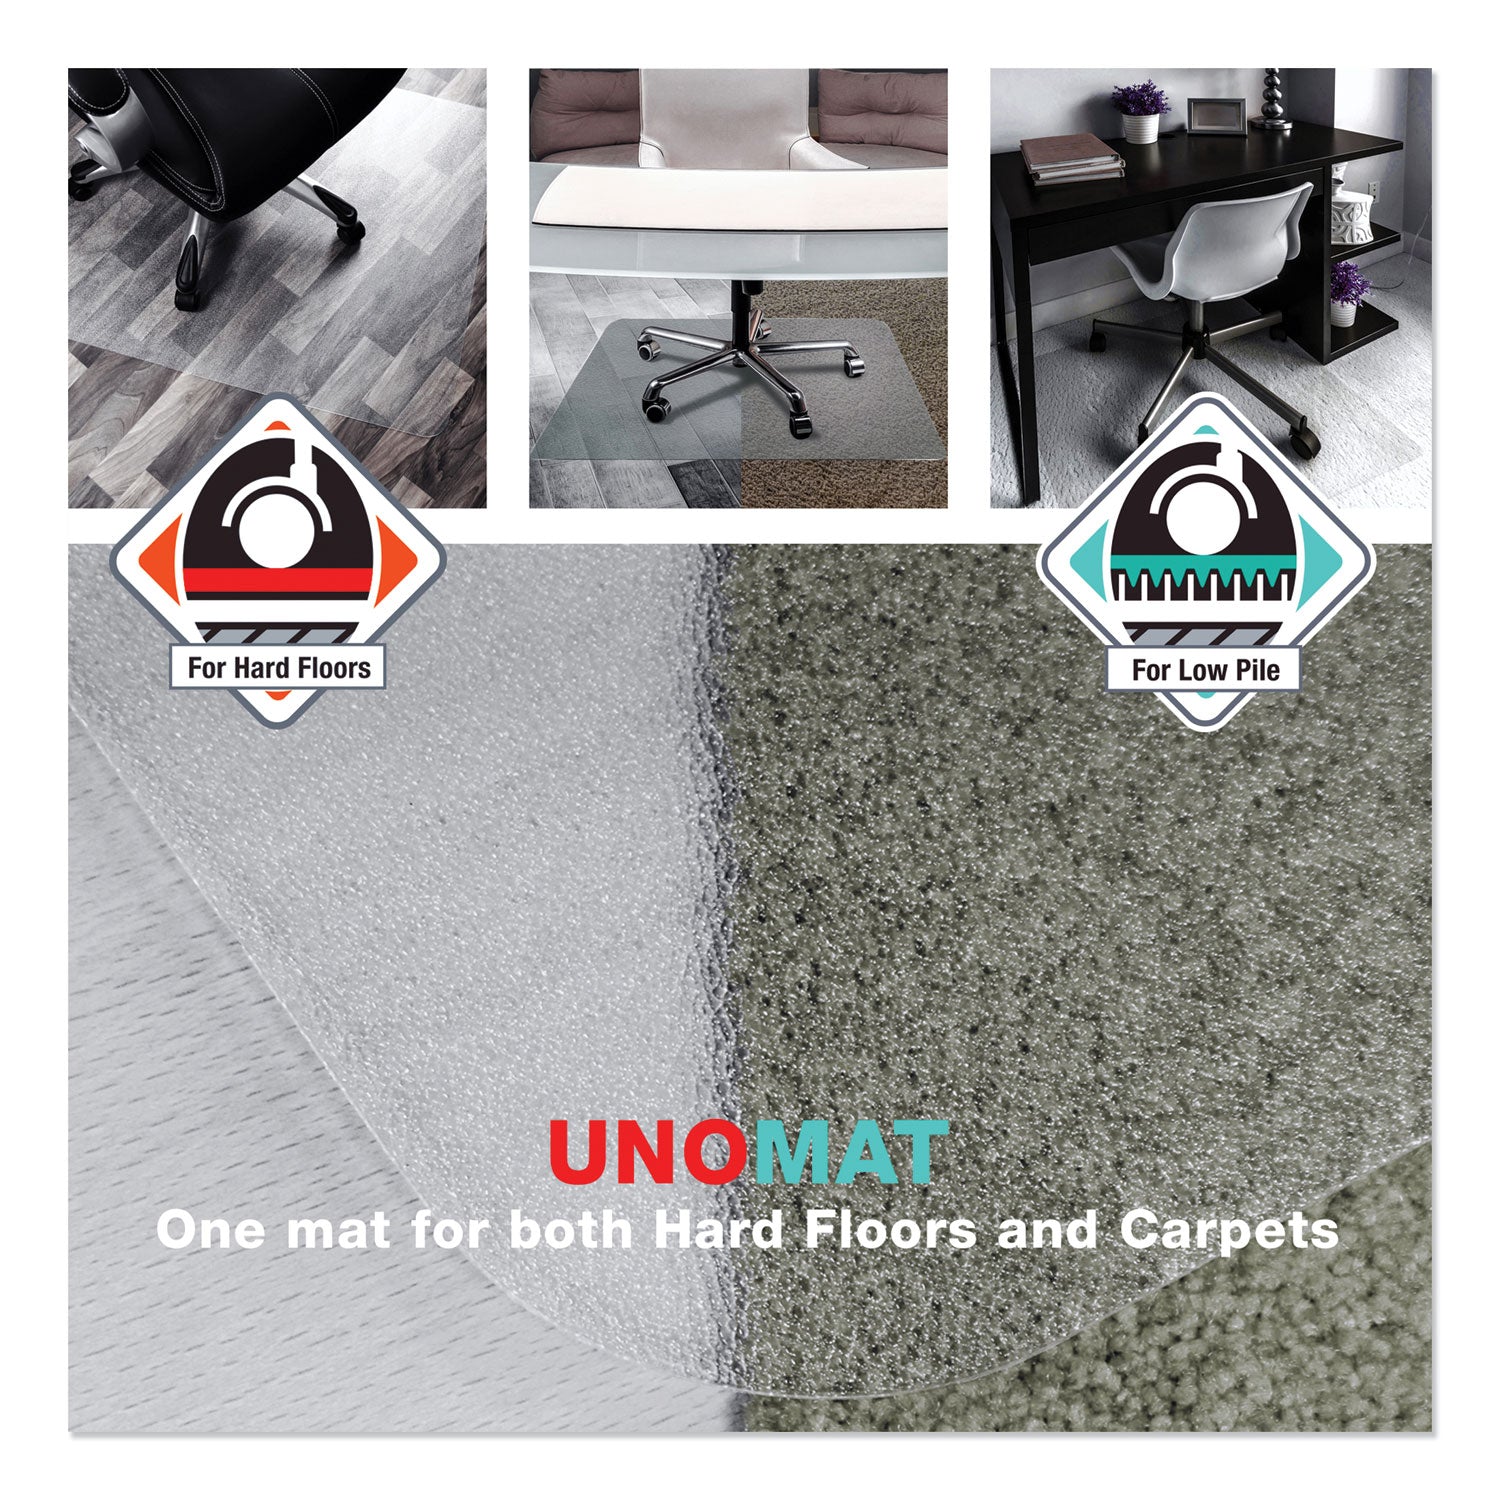 cleartex-unomat-anti-slip-chair-mat-for-hard-floors-flat-pile-carpets-35-x-47-clear_flrec128920era - 5